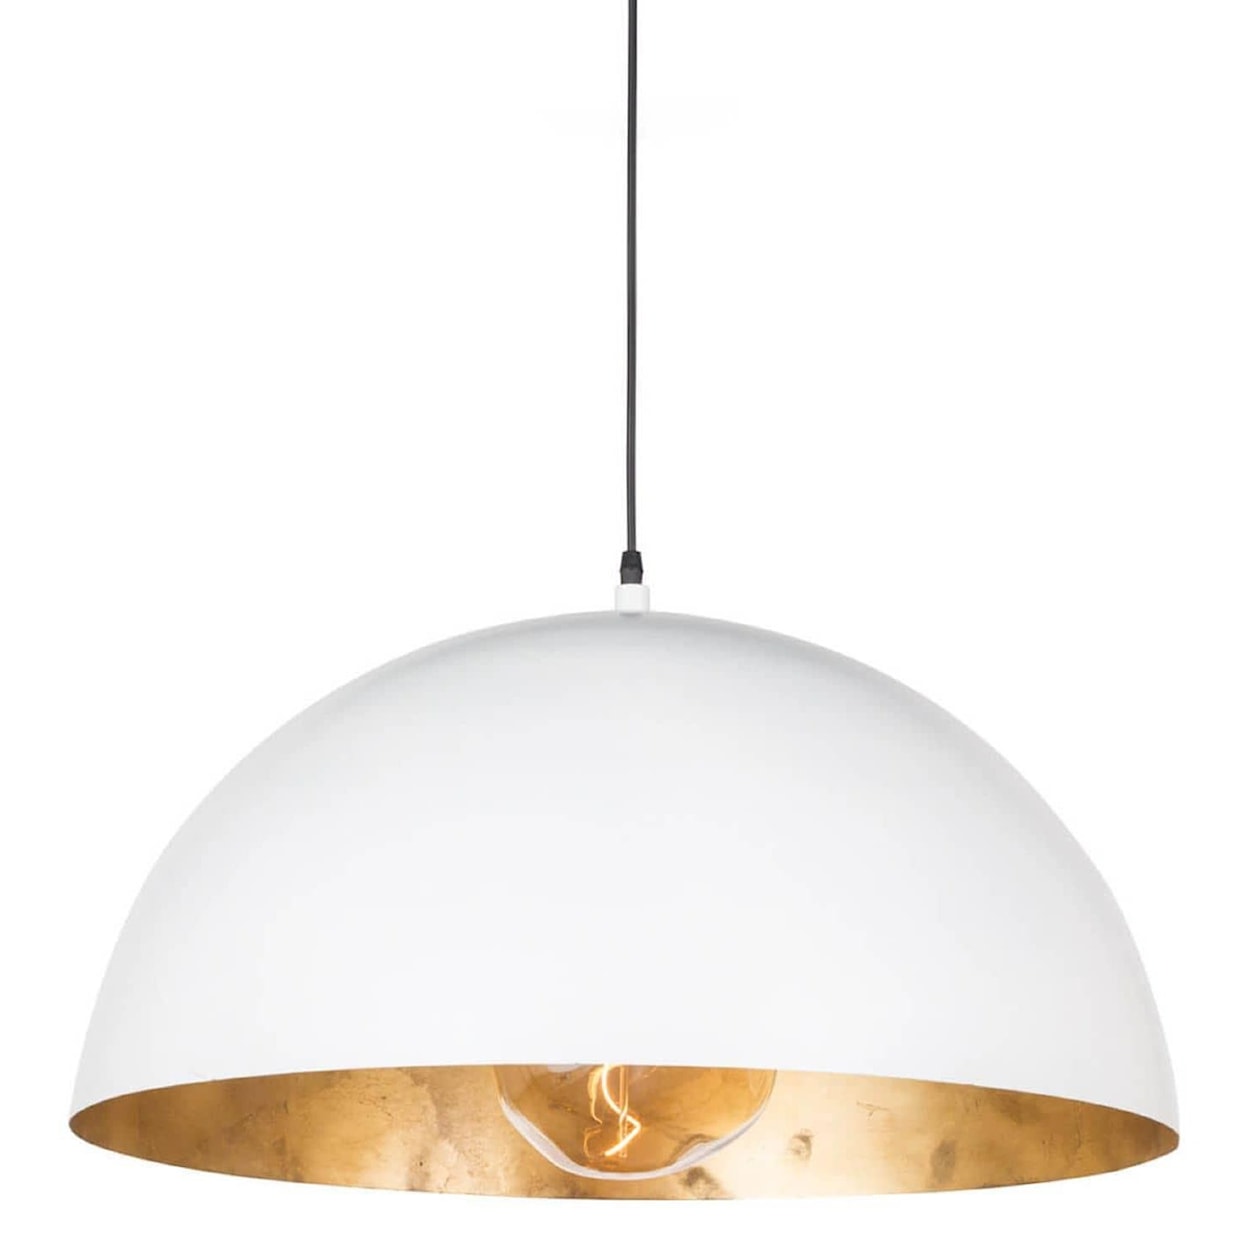 Regina-Andrew Design Chandeliers Molten Light Bulb (Small)